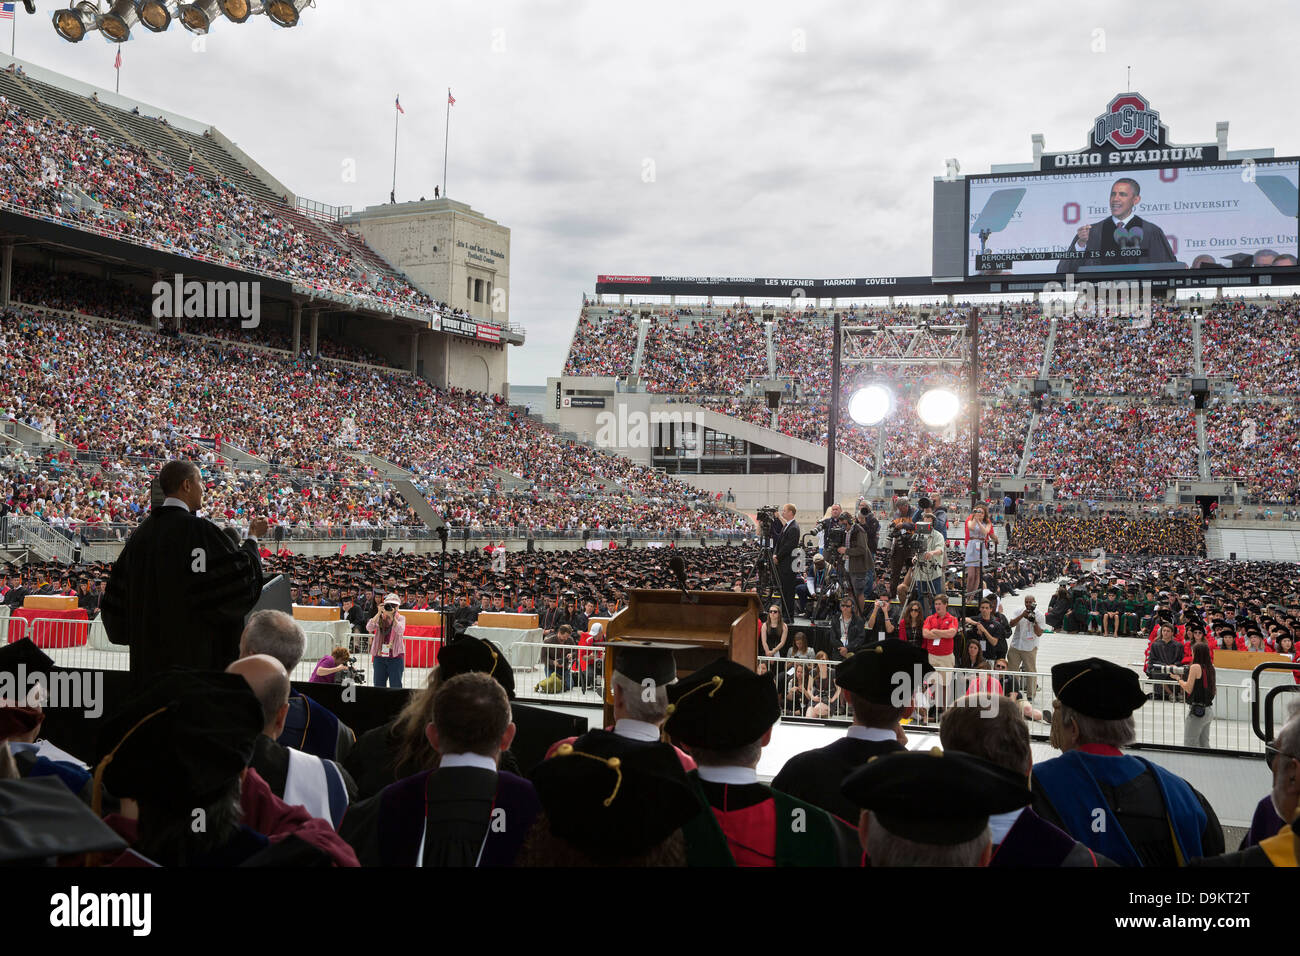 US President Barack Obama delivers the address during The Ohio State University commencement at Ohio Stadium May 5, 2013 in Columbus, Ohio. Stock Photo